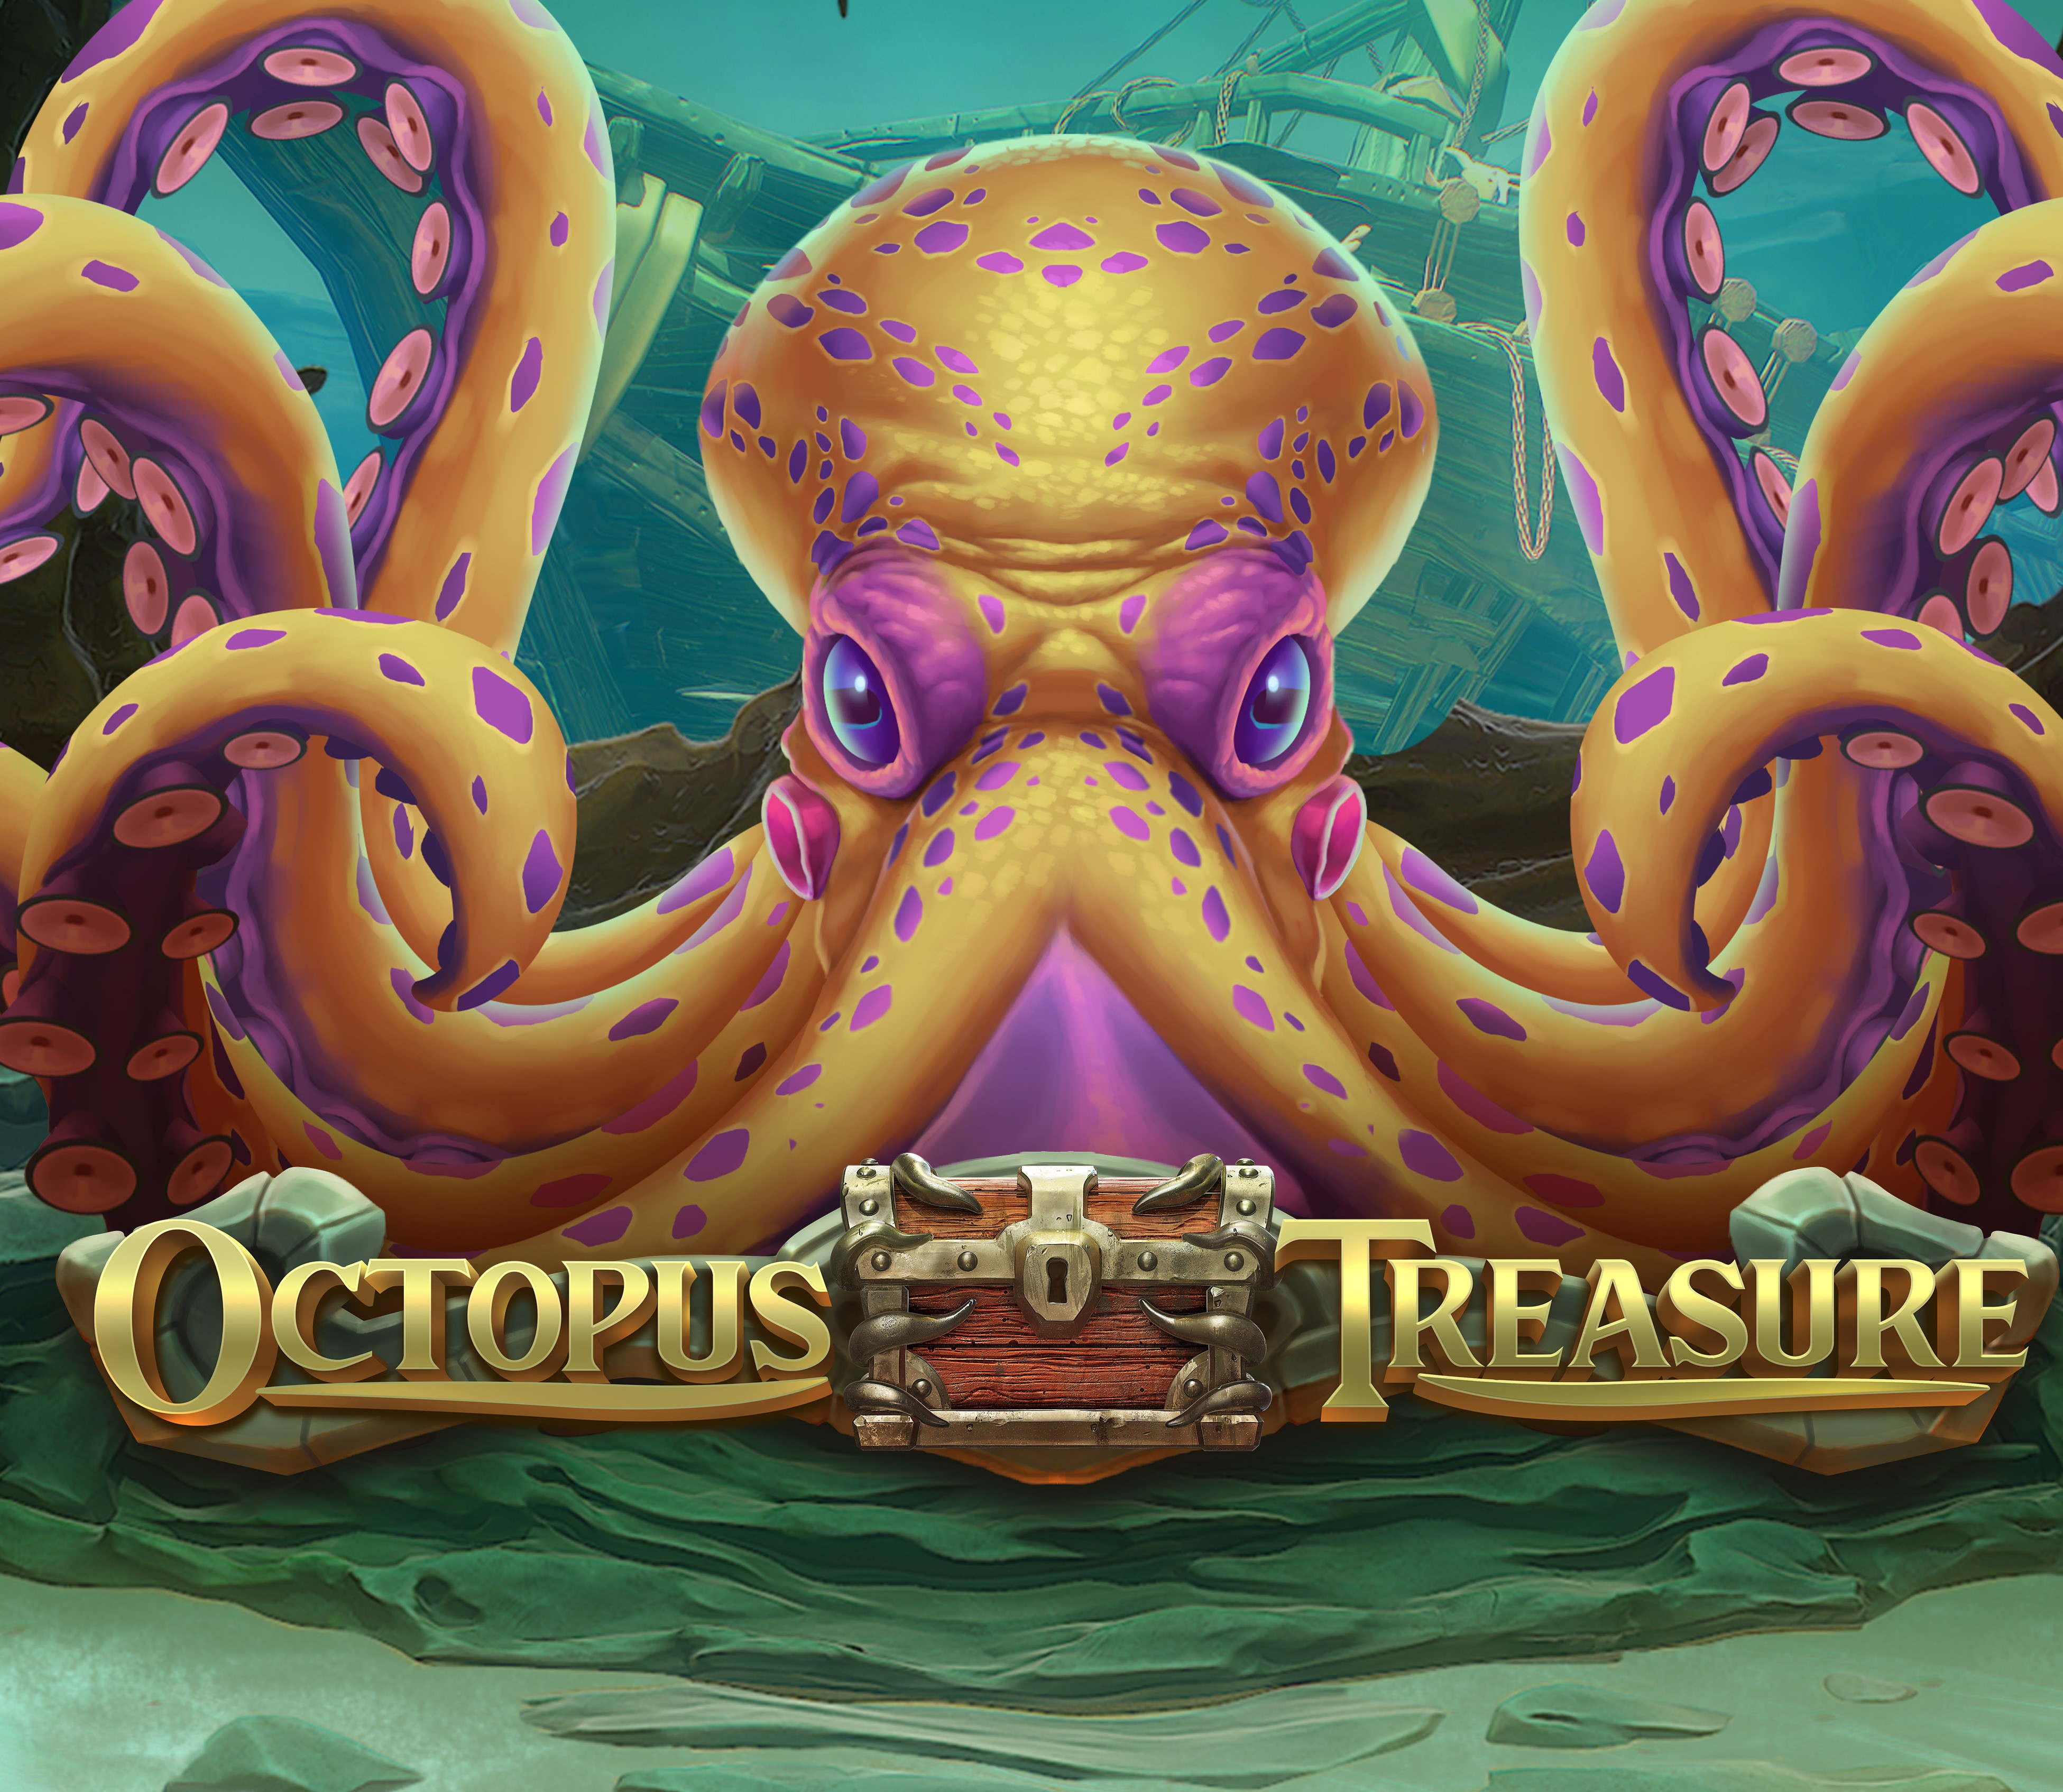 Octopus Treasure™ Video Slot from Play’n’Go